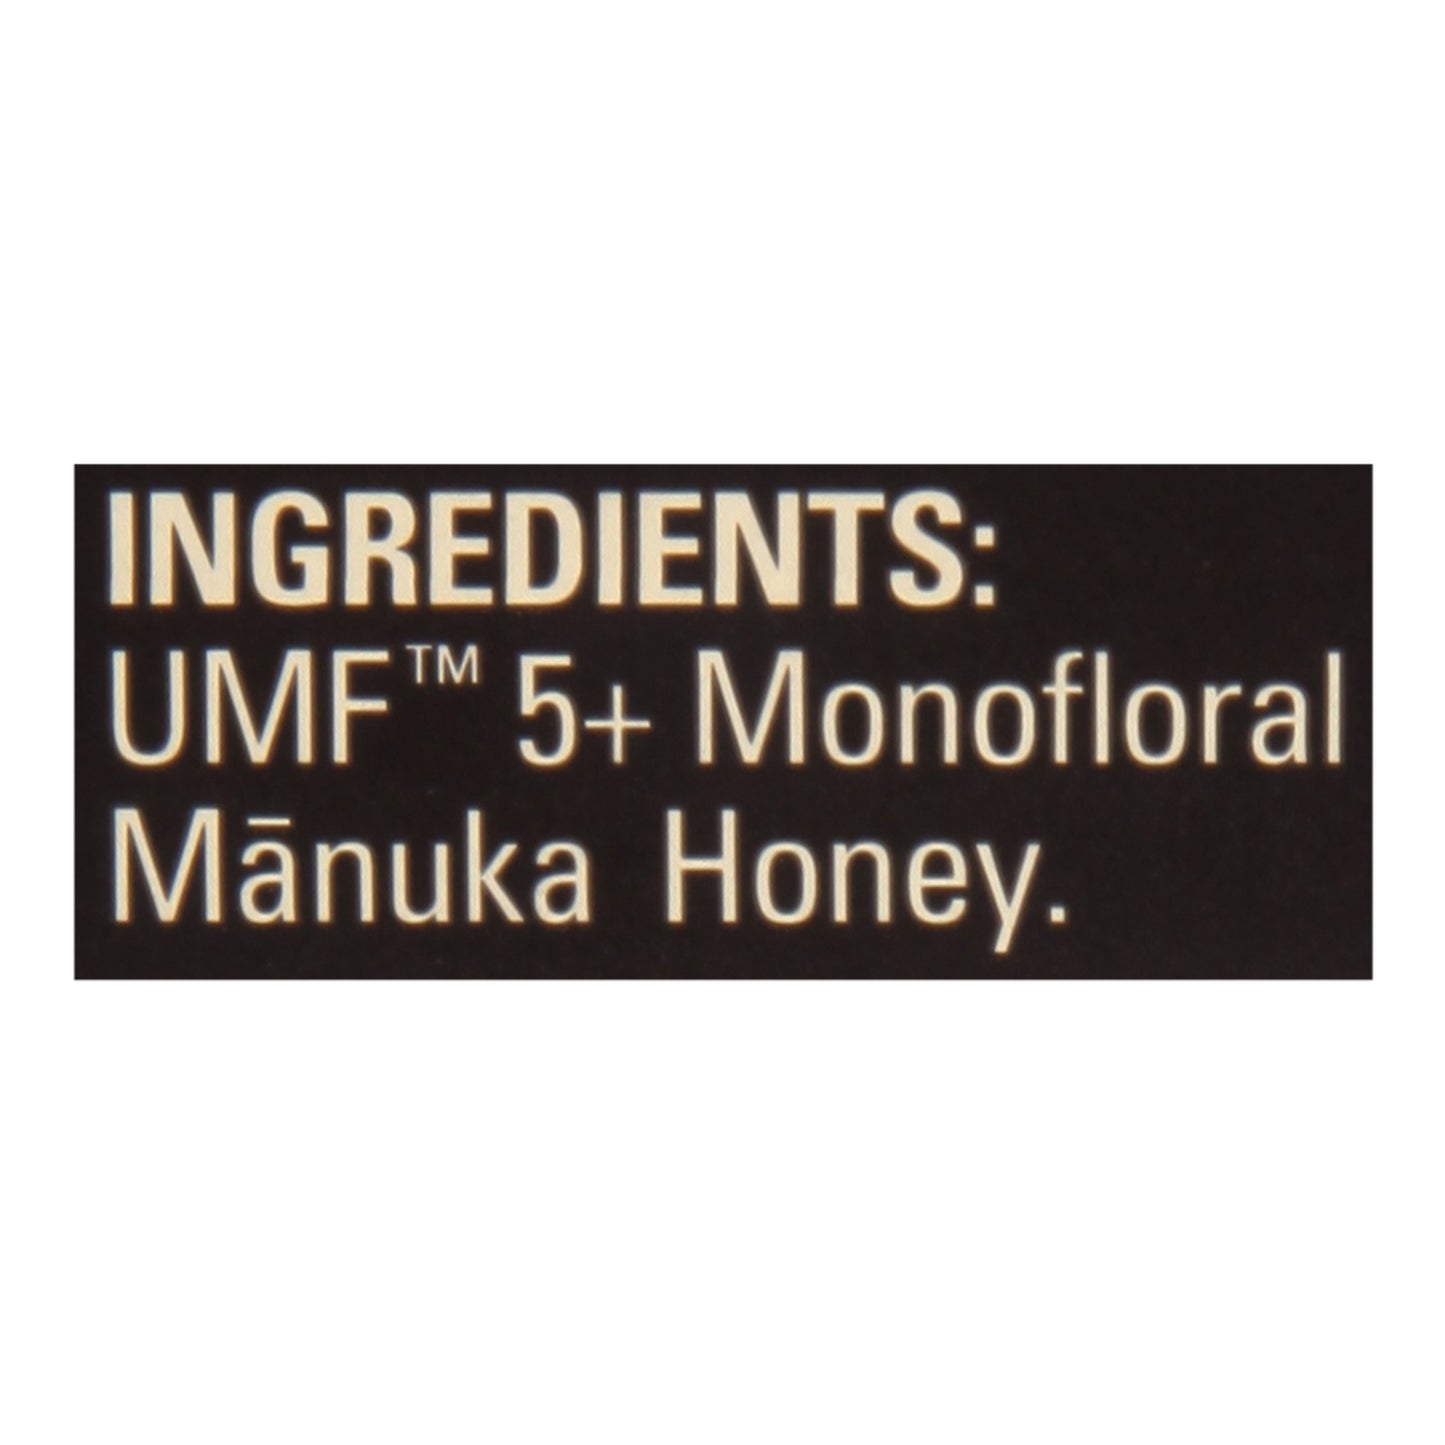 Ultra Manuka Honey - 17.6oz(500g)| Comvita